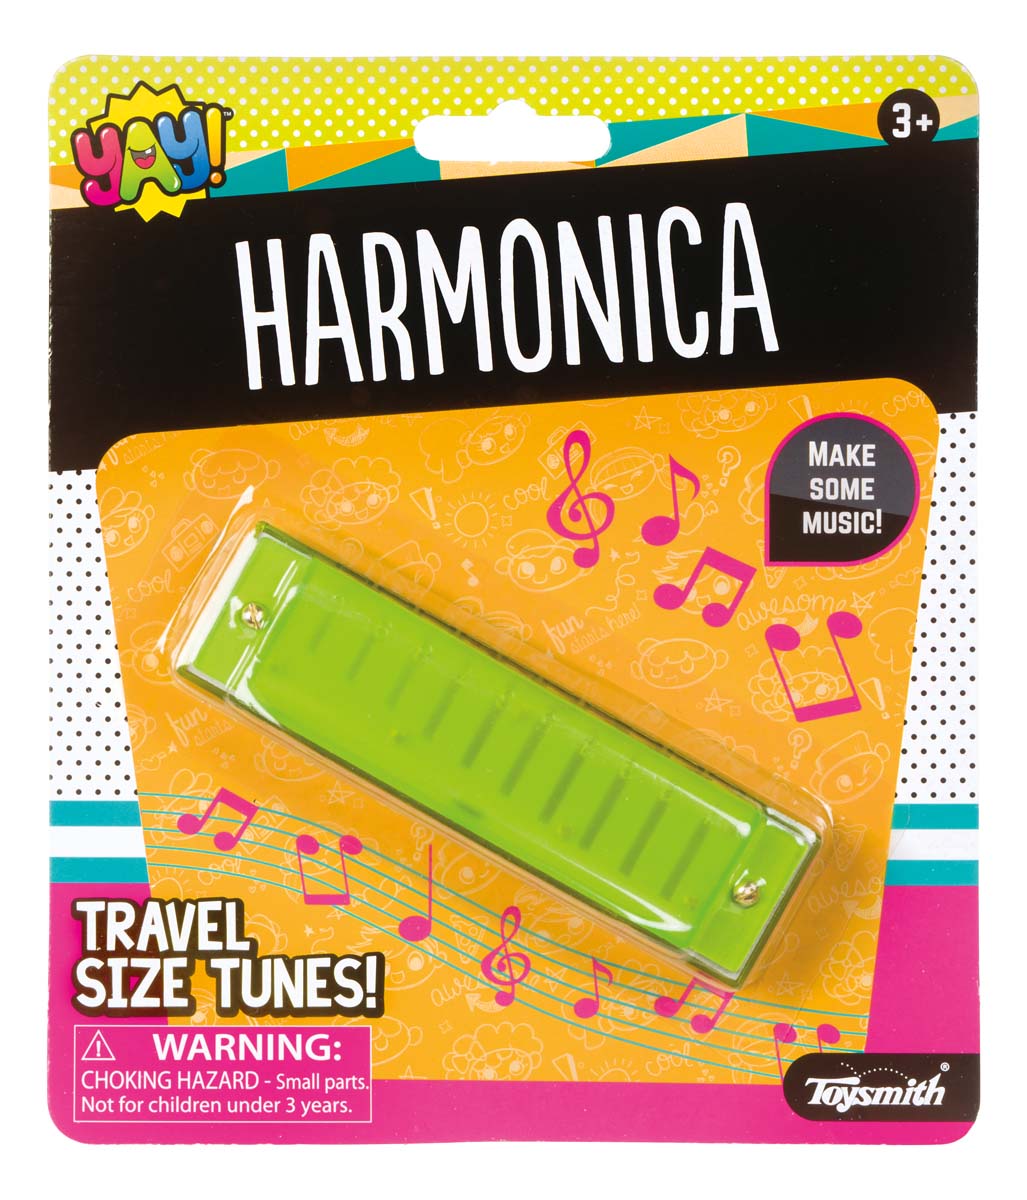 YAY! Harmonica